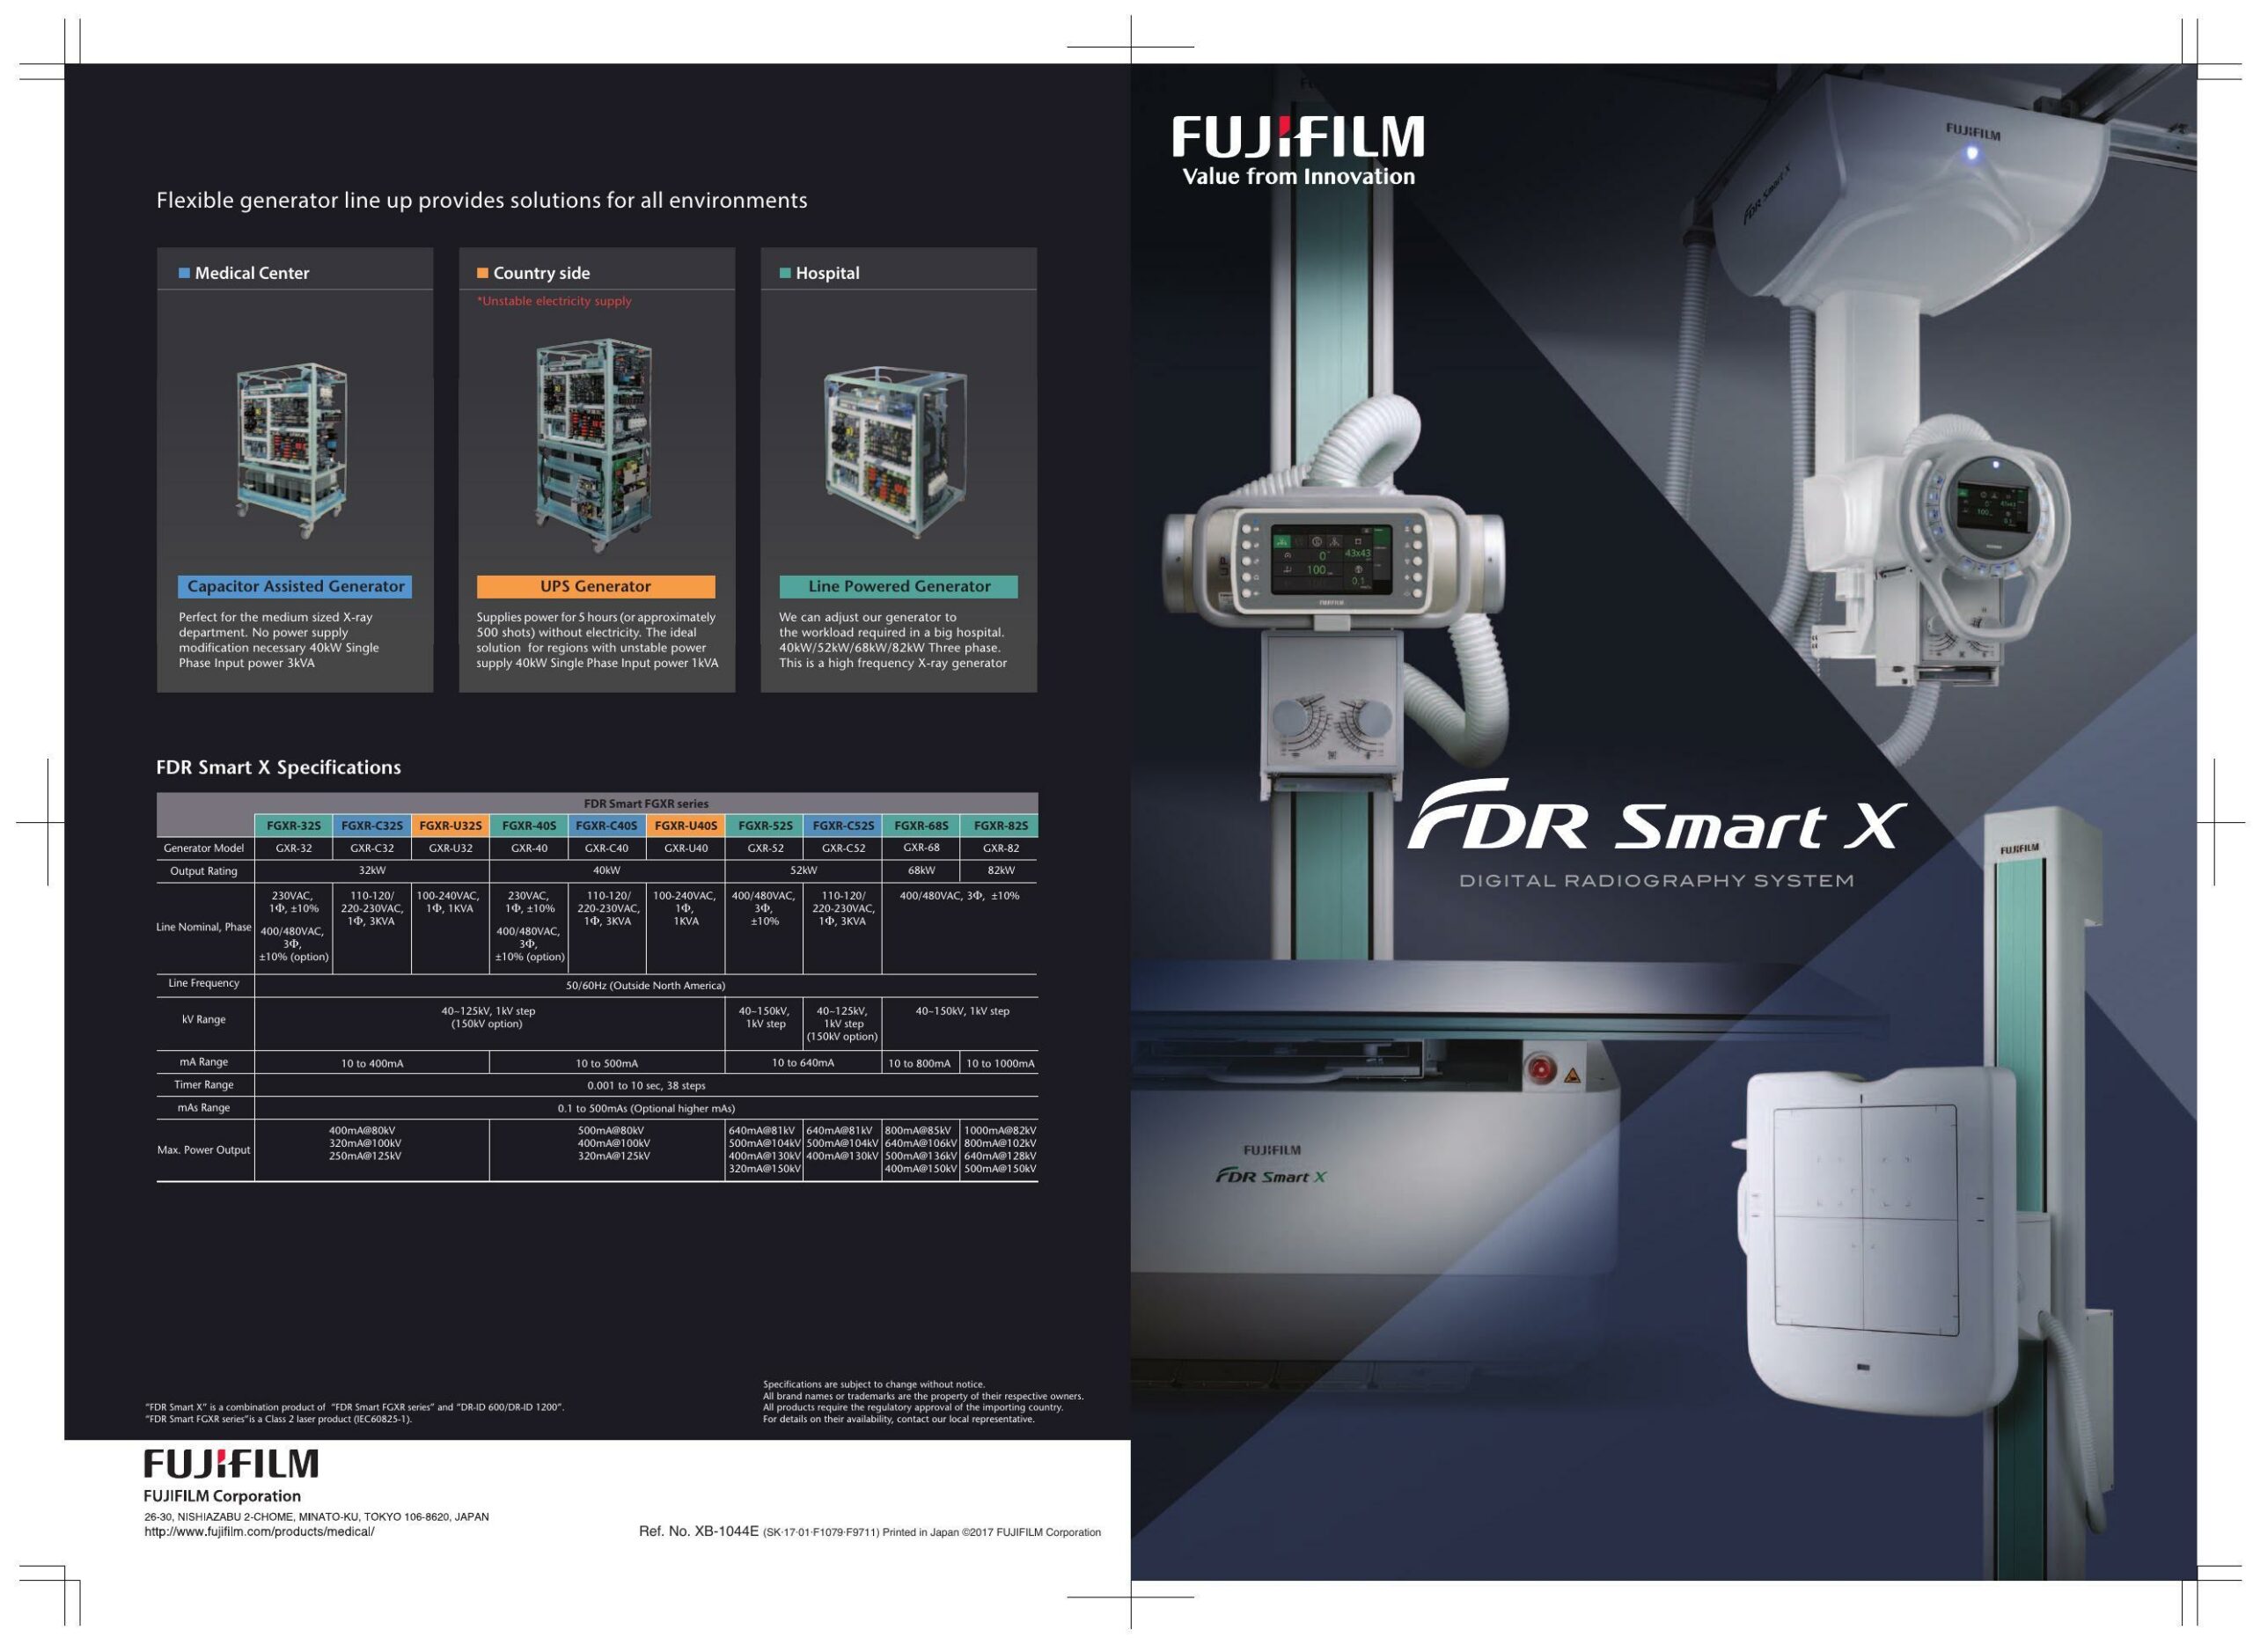 fdr-smart-x-digital-radiography-system-user-manual.pdf